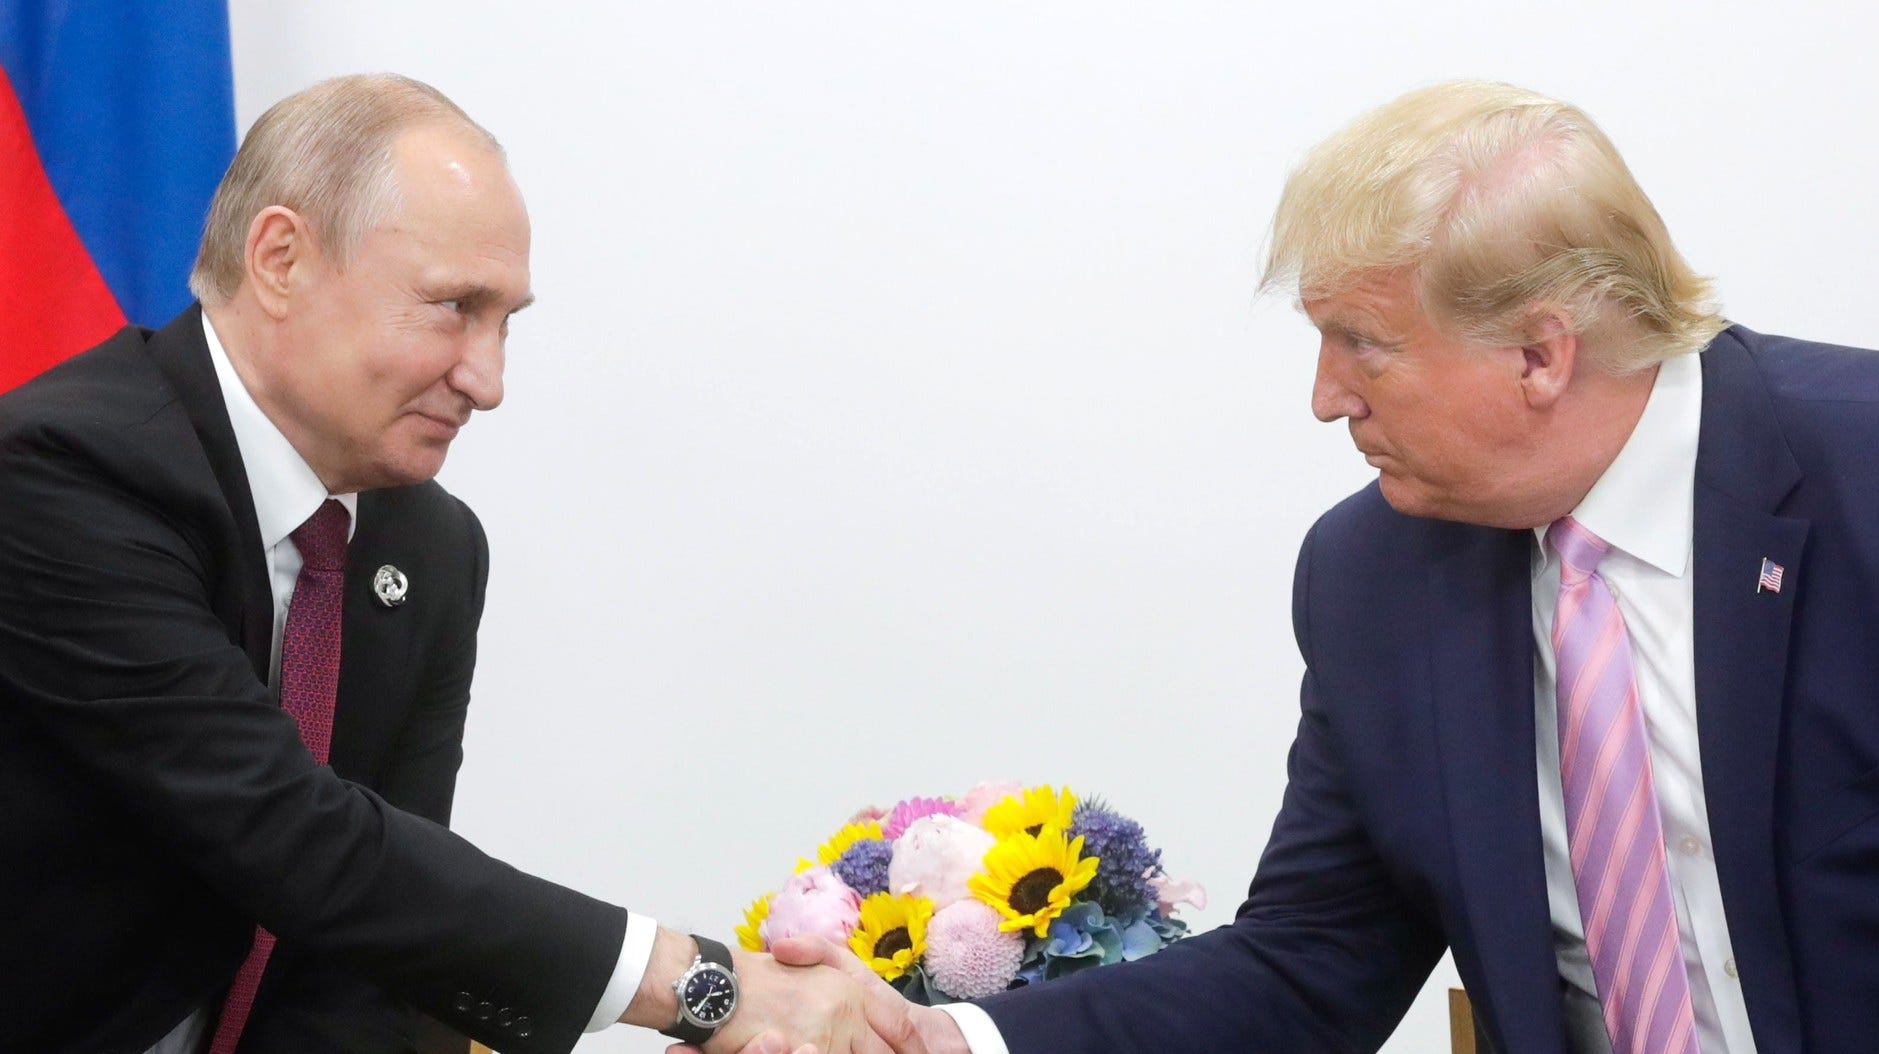 Donald Trump Vladimir Putin Joke About Reporters Fake News At G20 9358